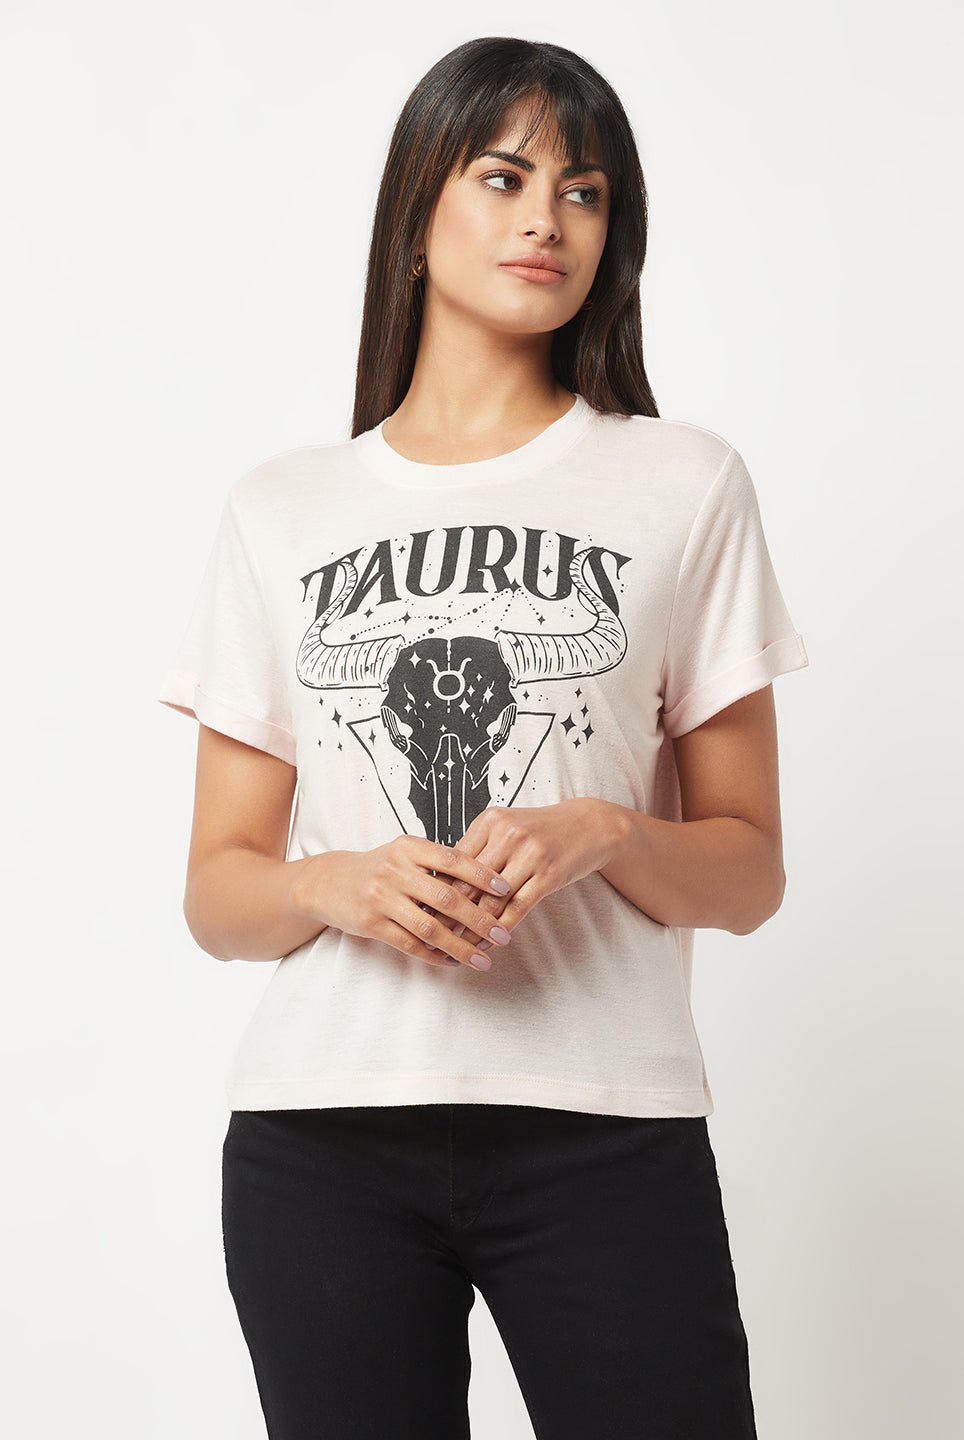 Taurus Zodiac Sign T-shirt